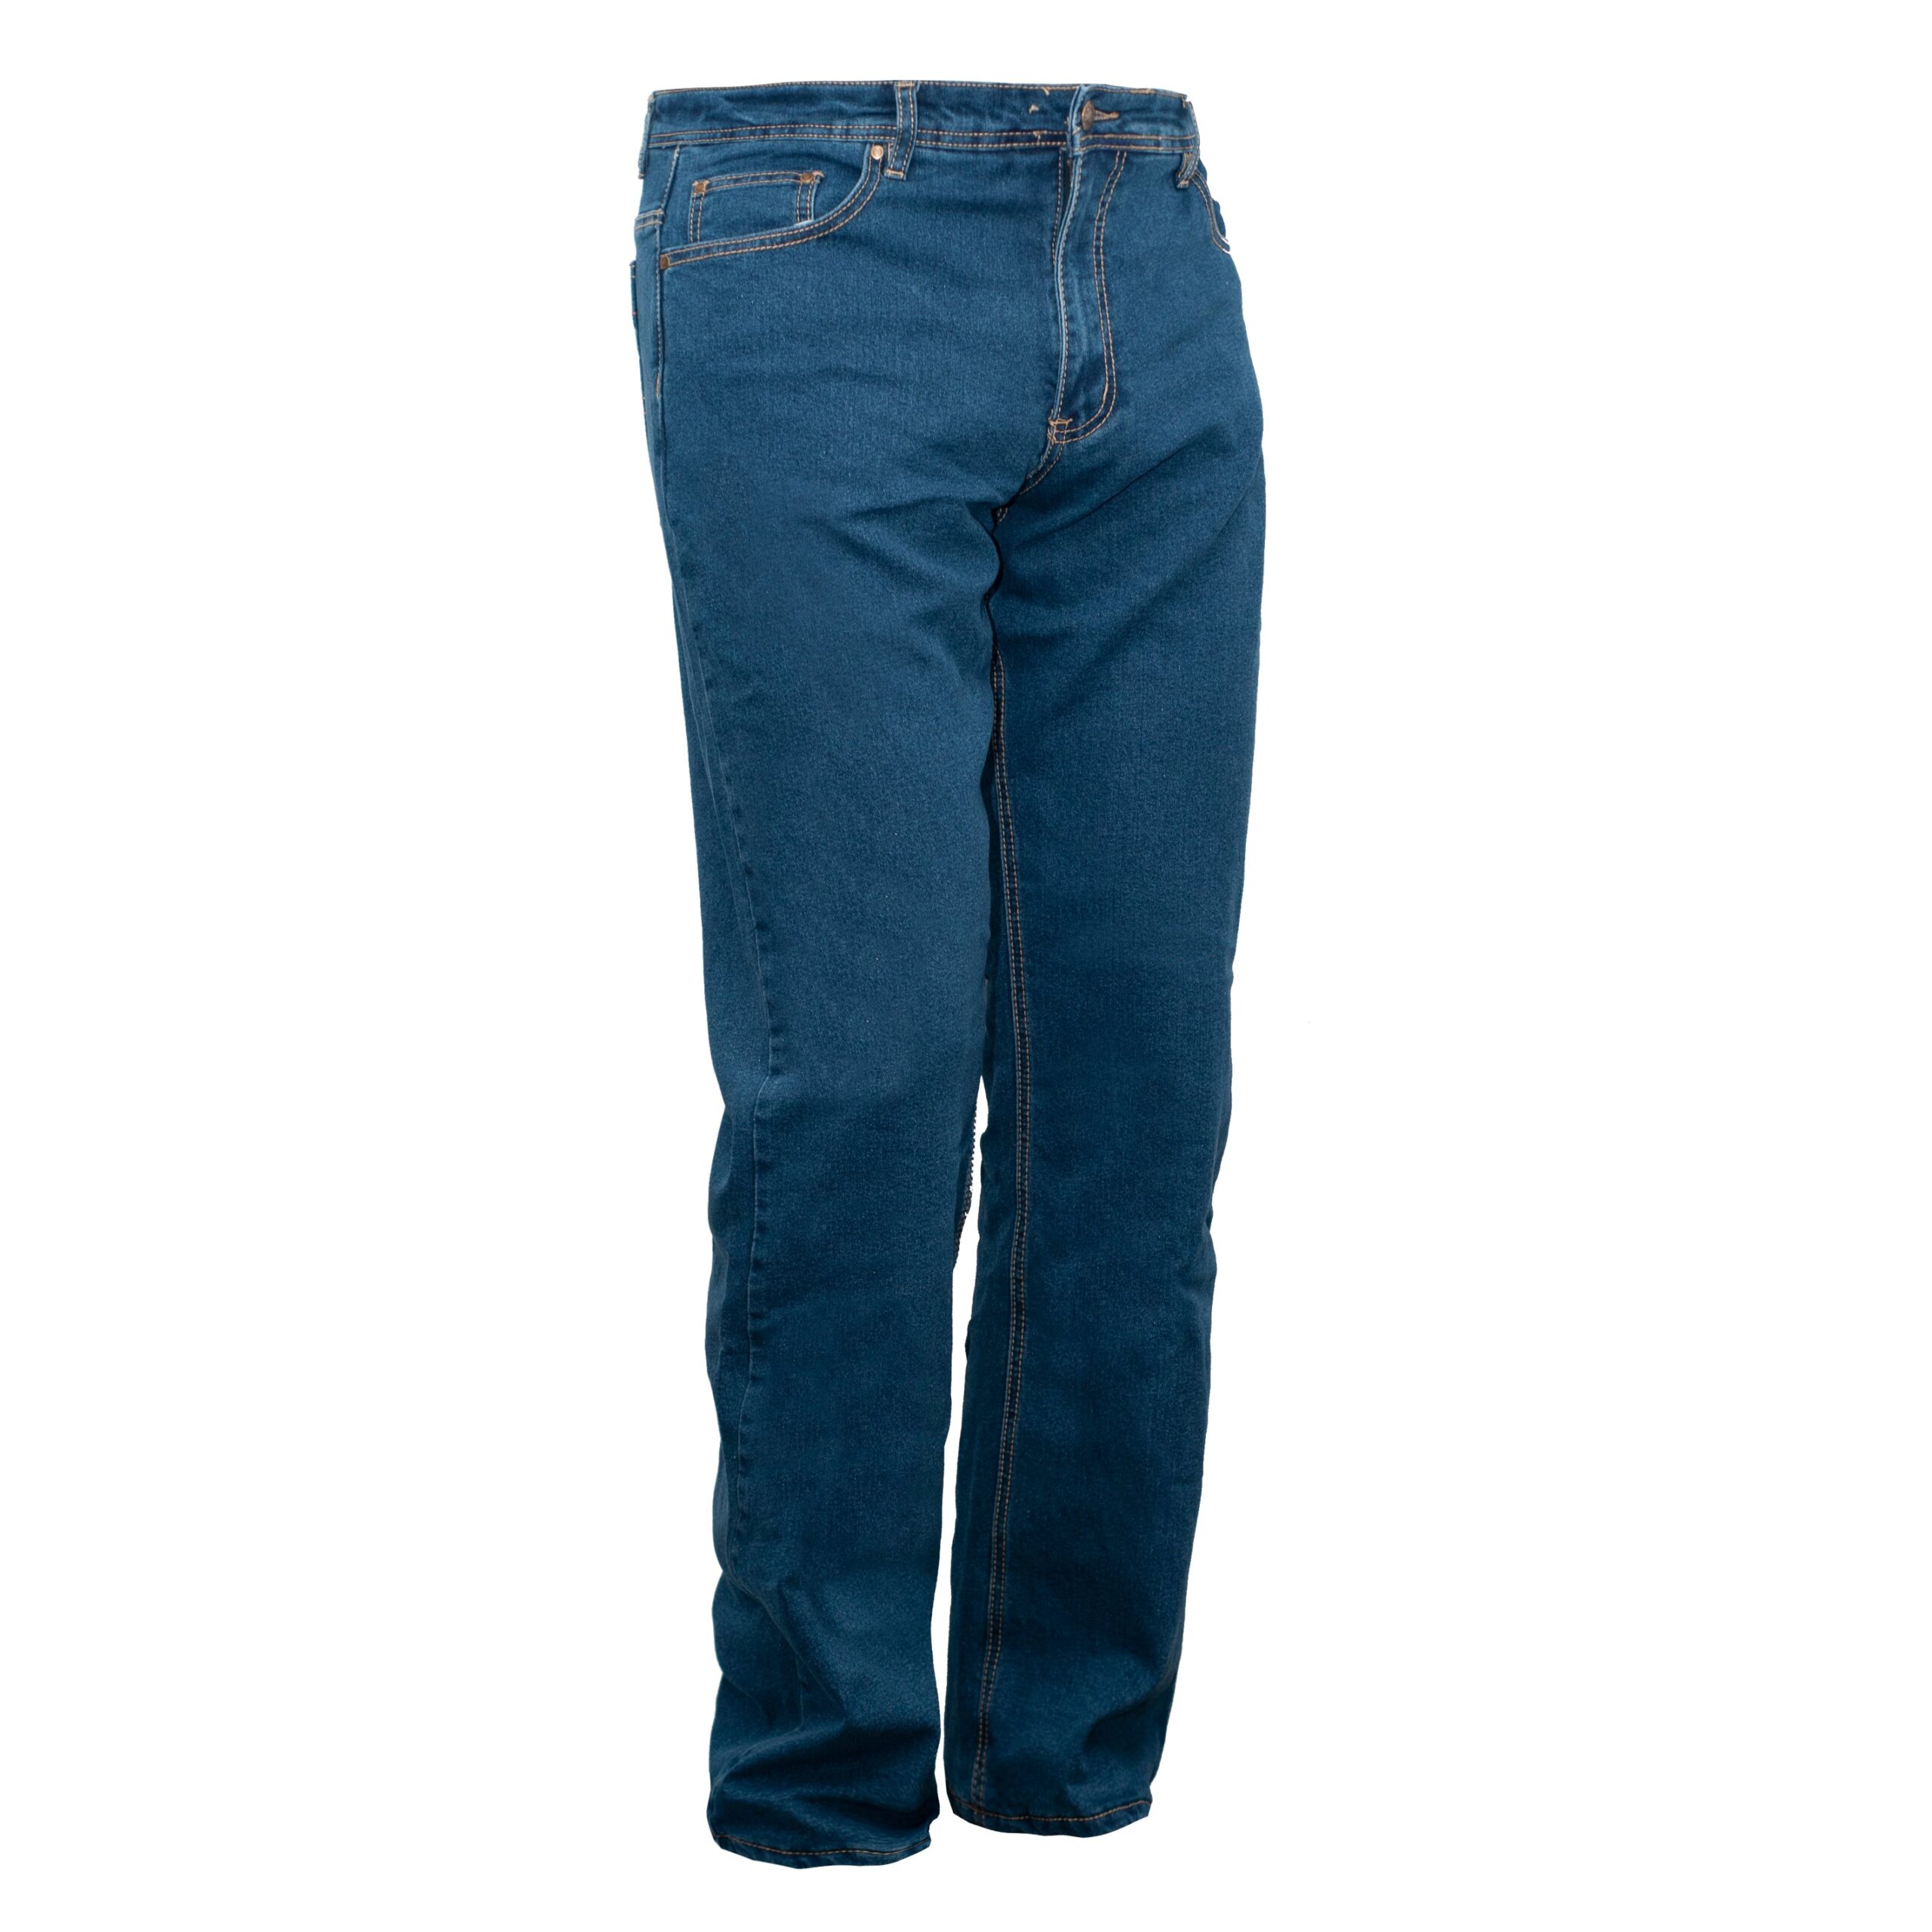 Orange River – CYR – Jeans